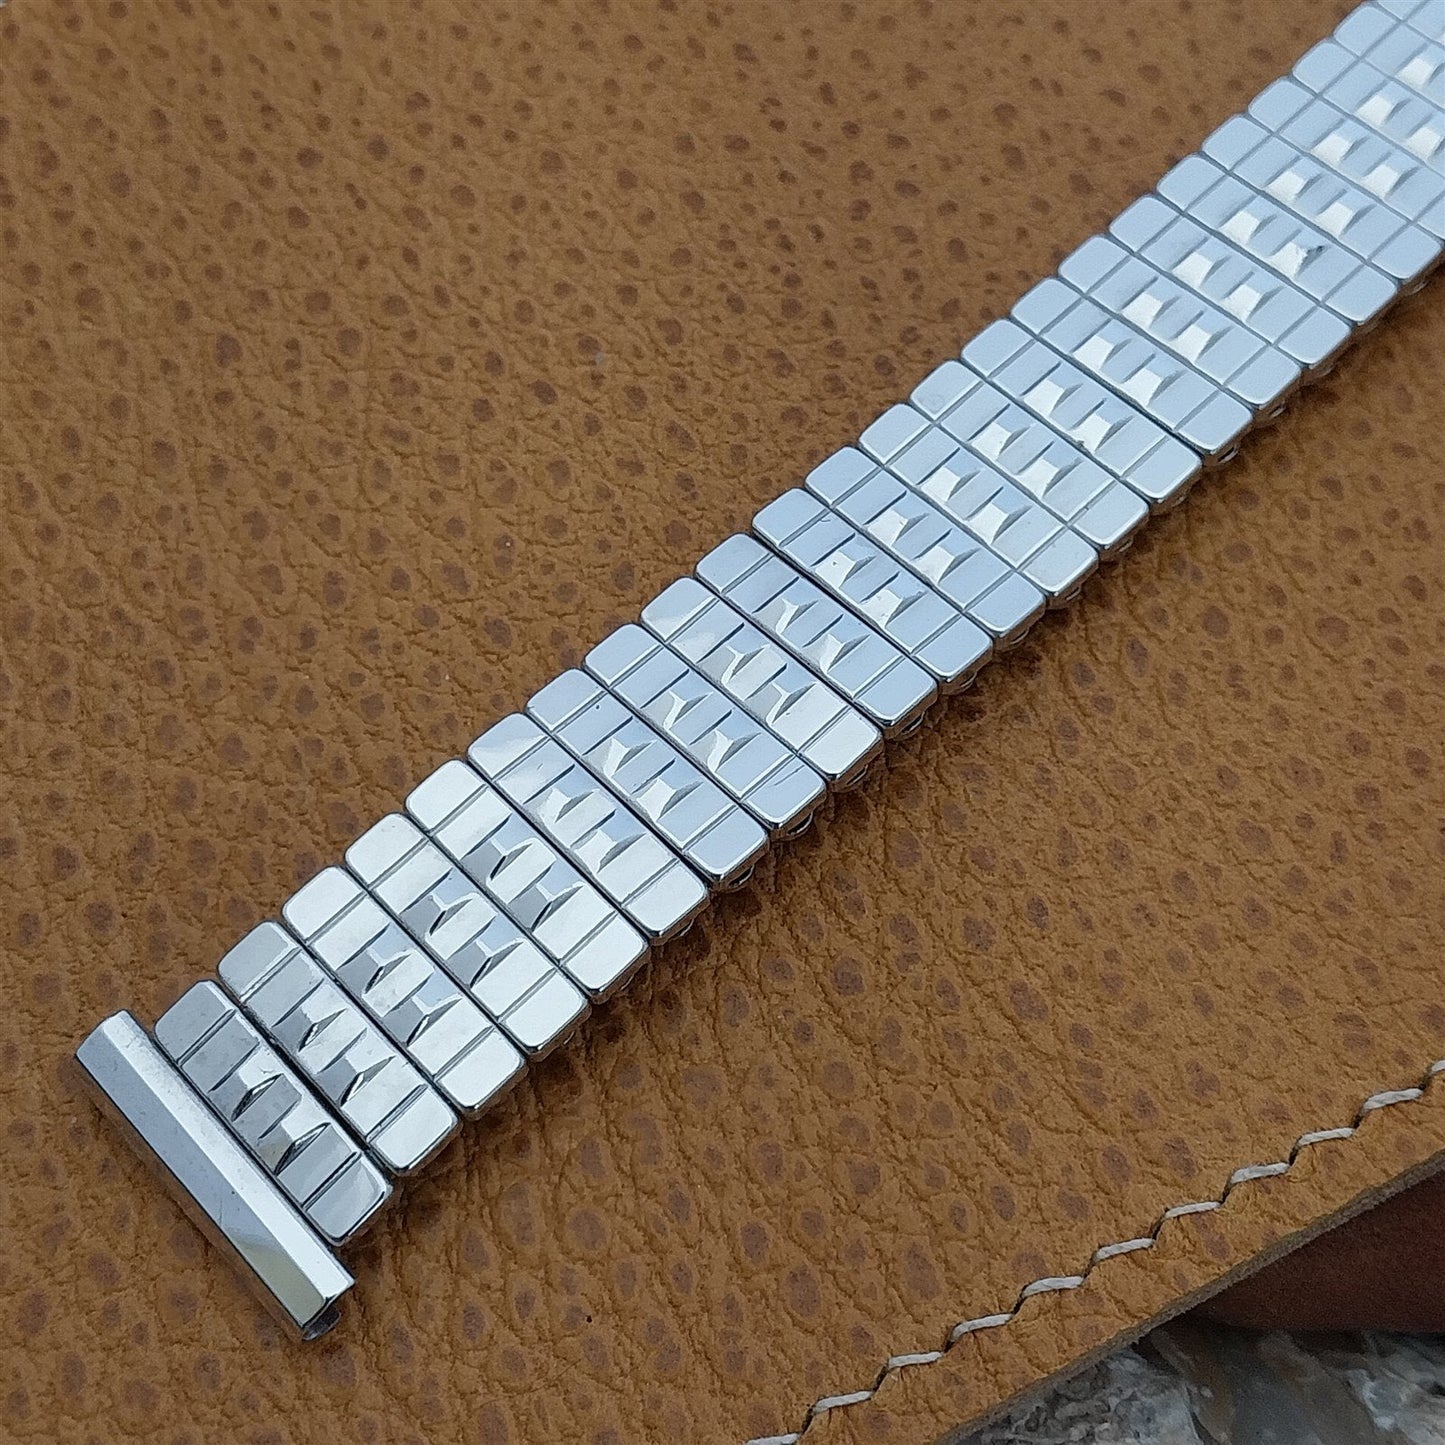 19mm 18mm 17mm 1960s 10k White Gold-Filled Kreisler Unused Vintage Watch Band